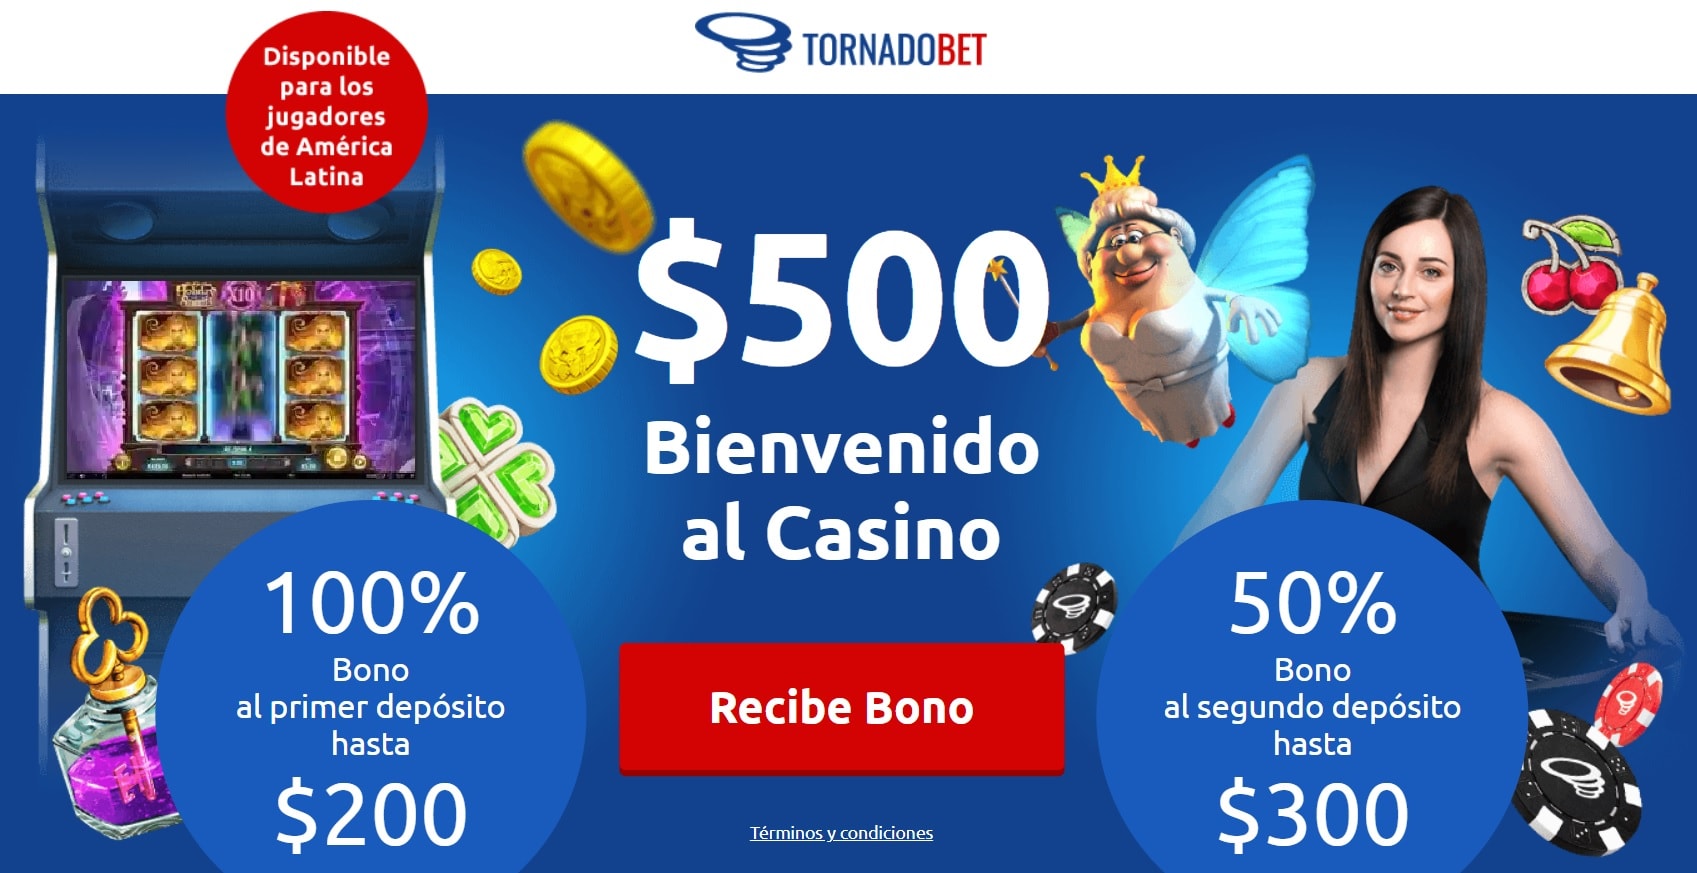 casino online argentina tornado bet